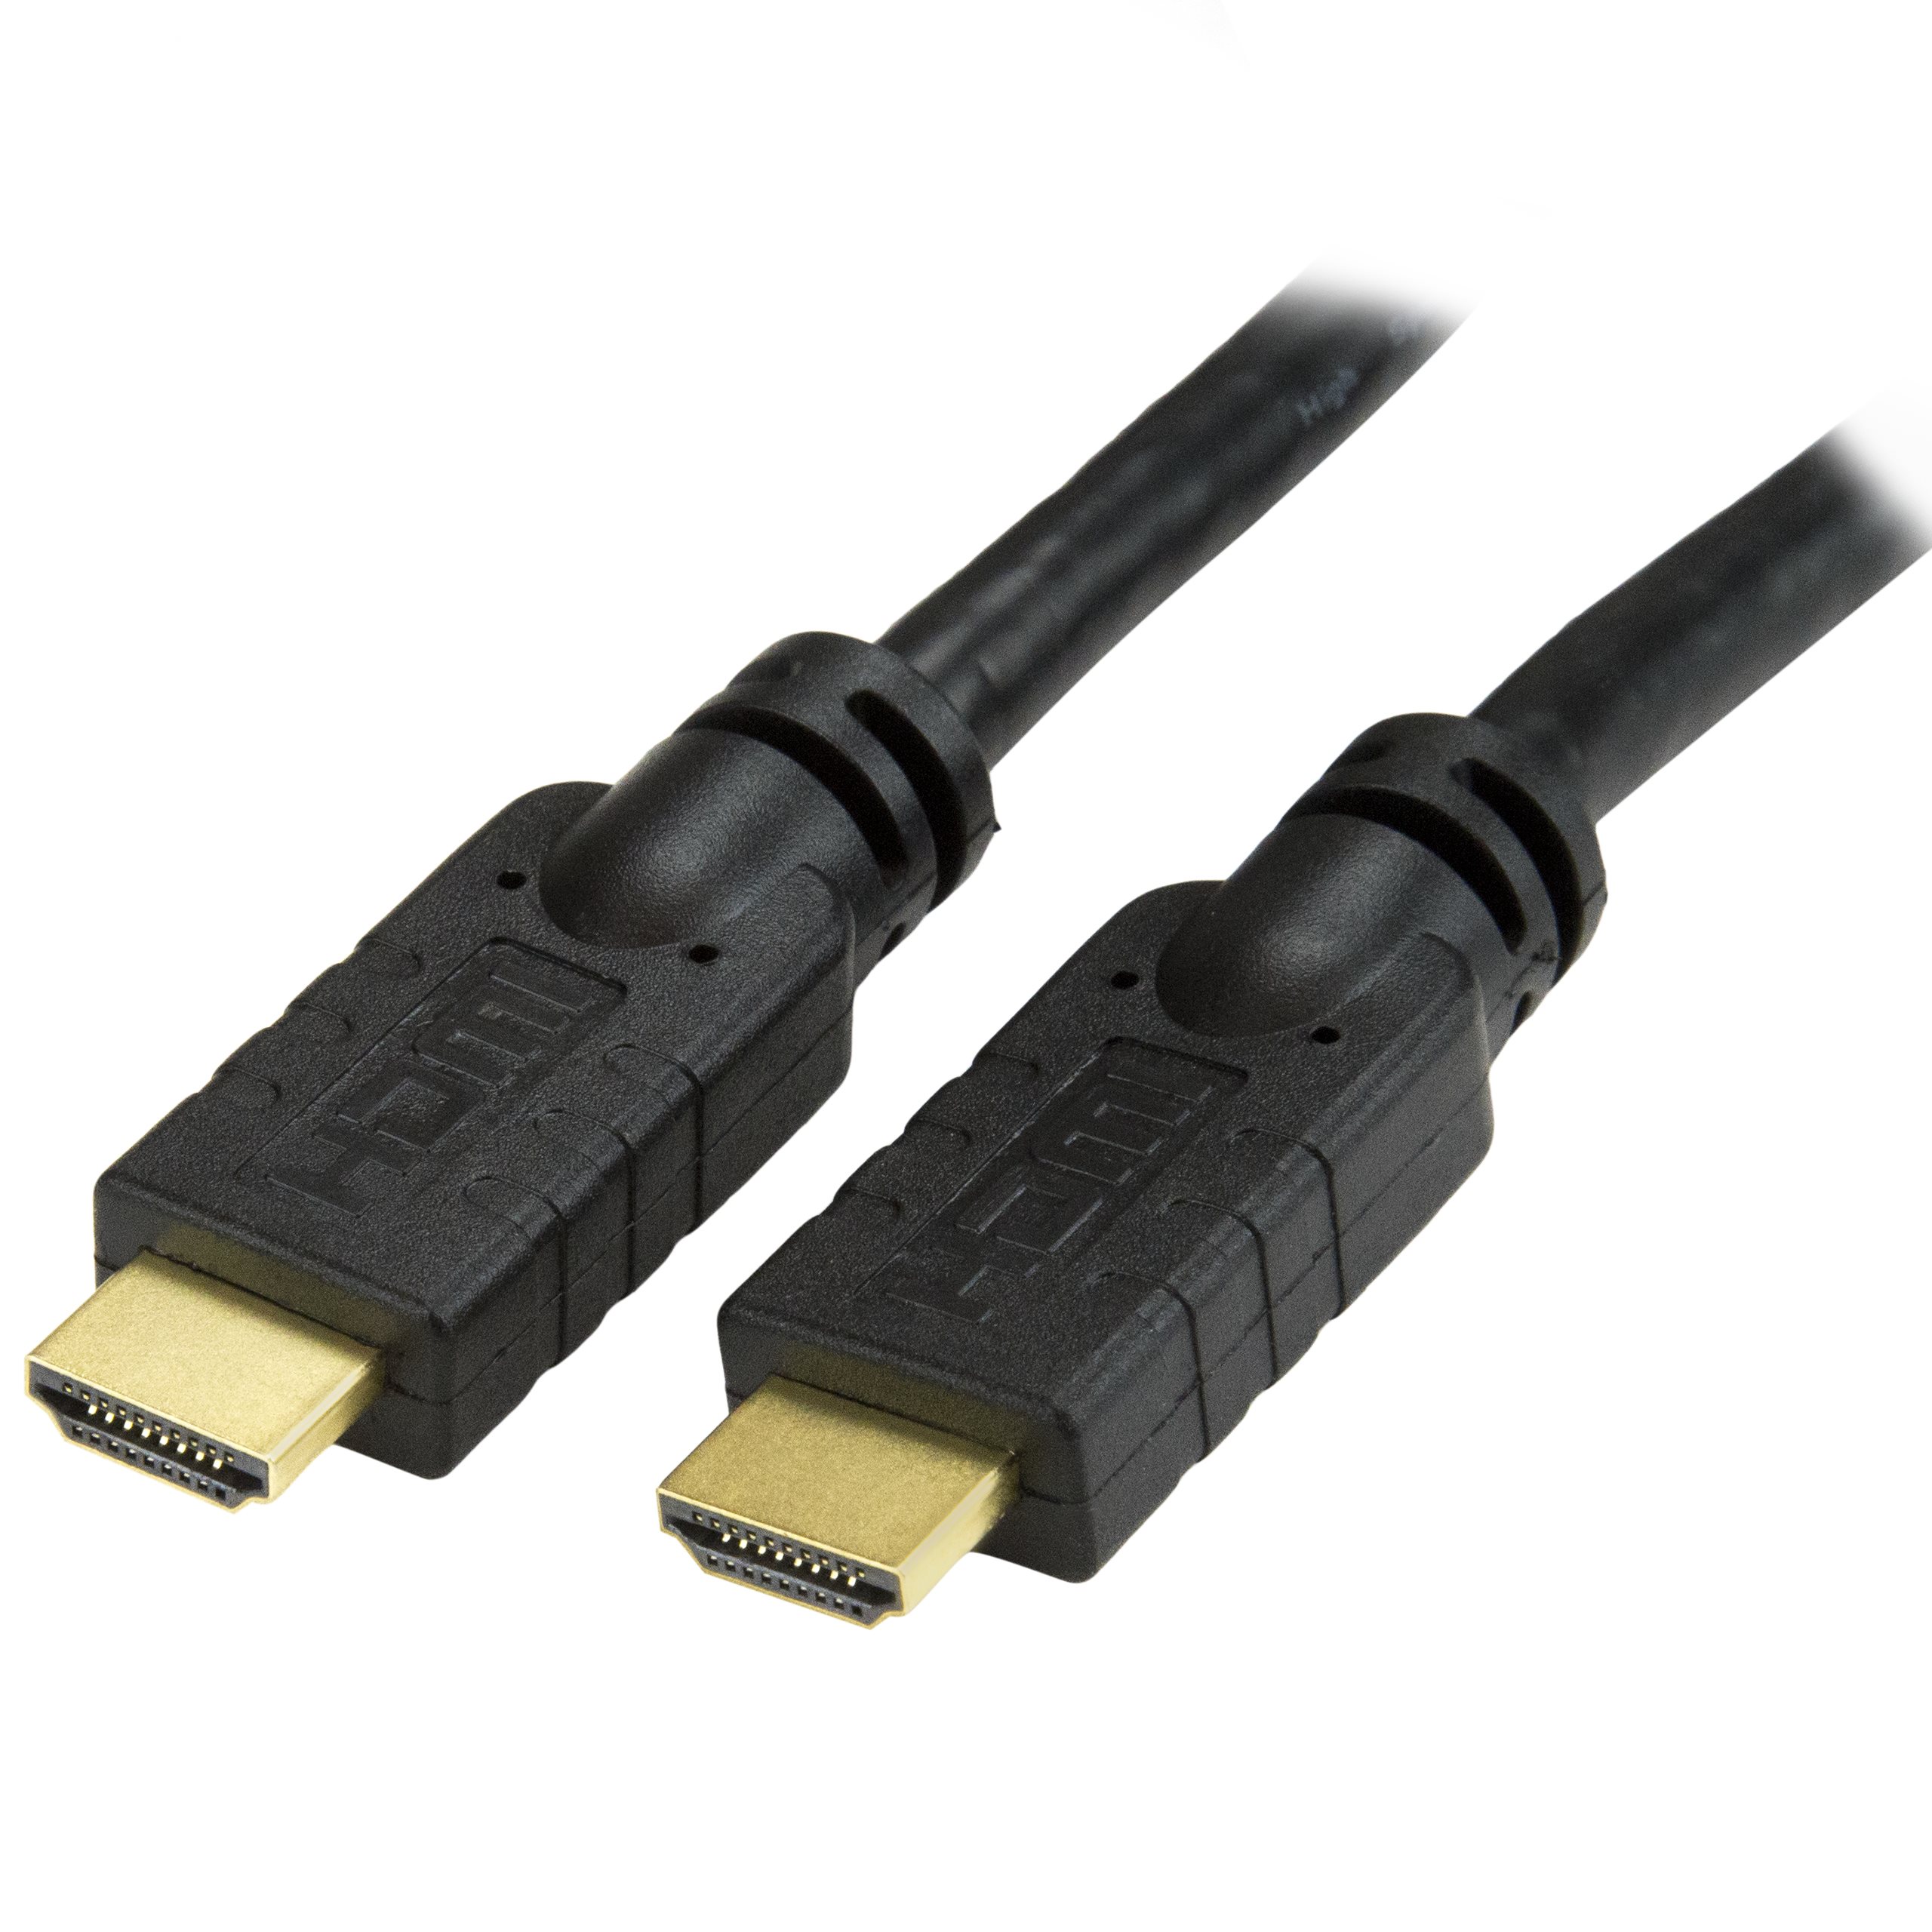  StarTech.com 7m High Speed HDMI Cable Ultra HD 4k x 2k